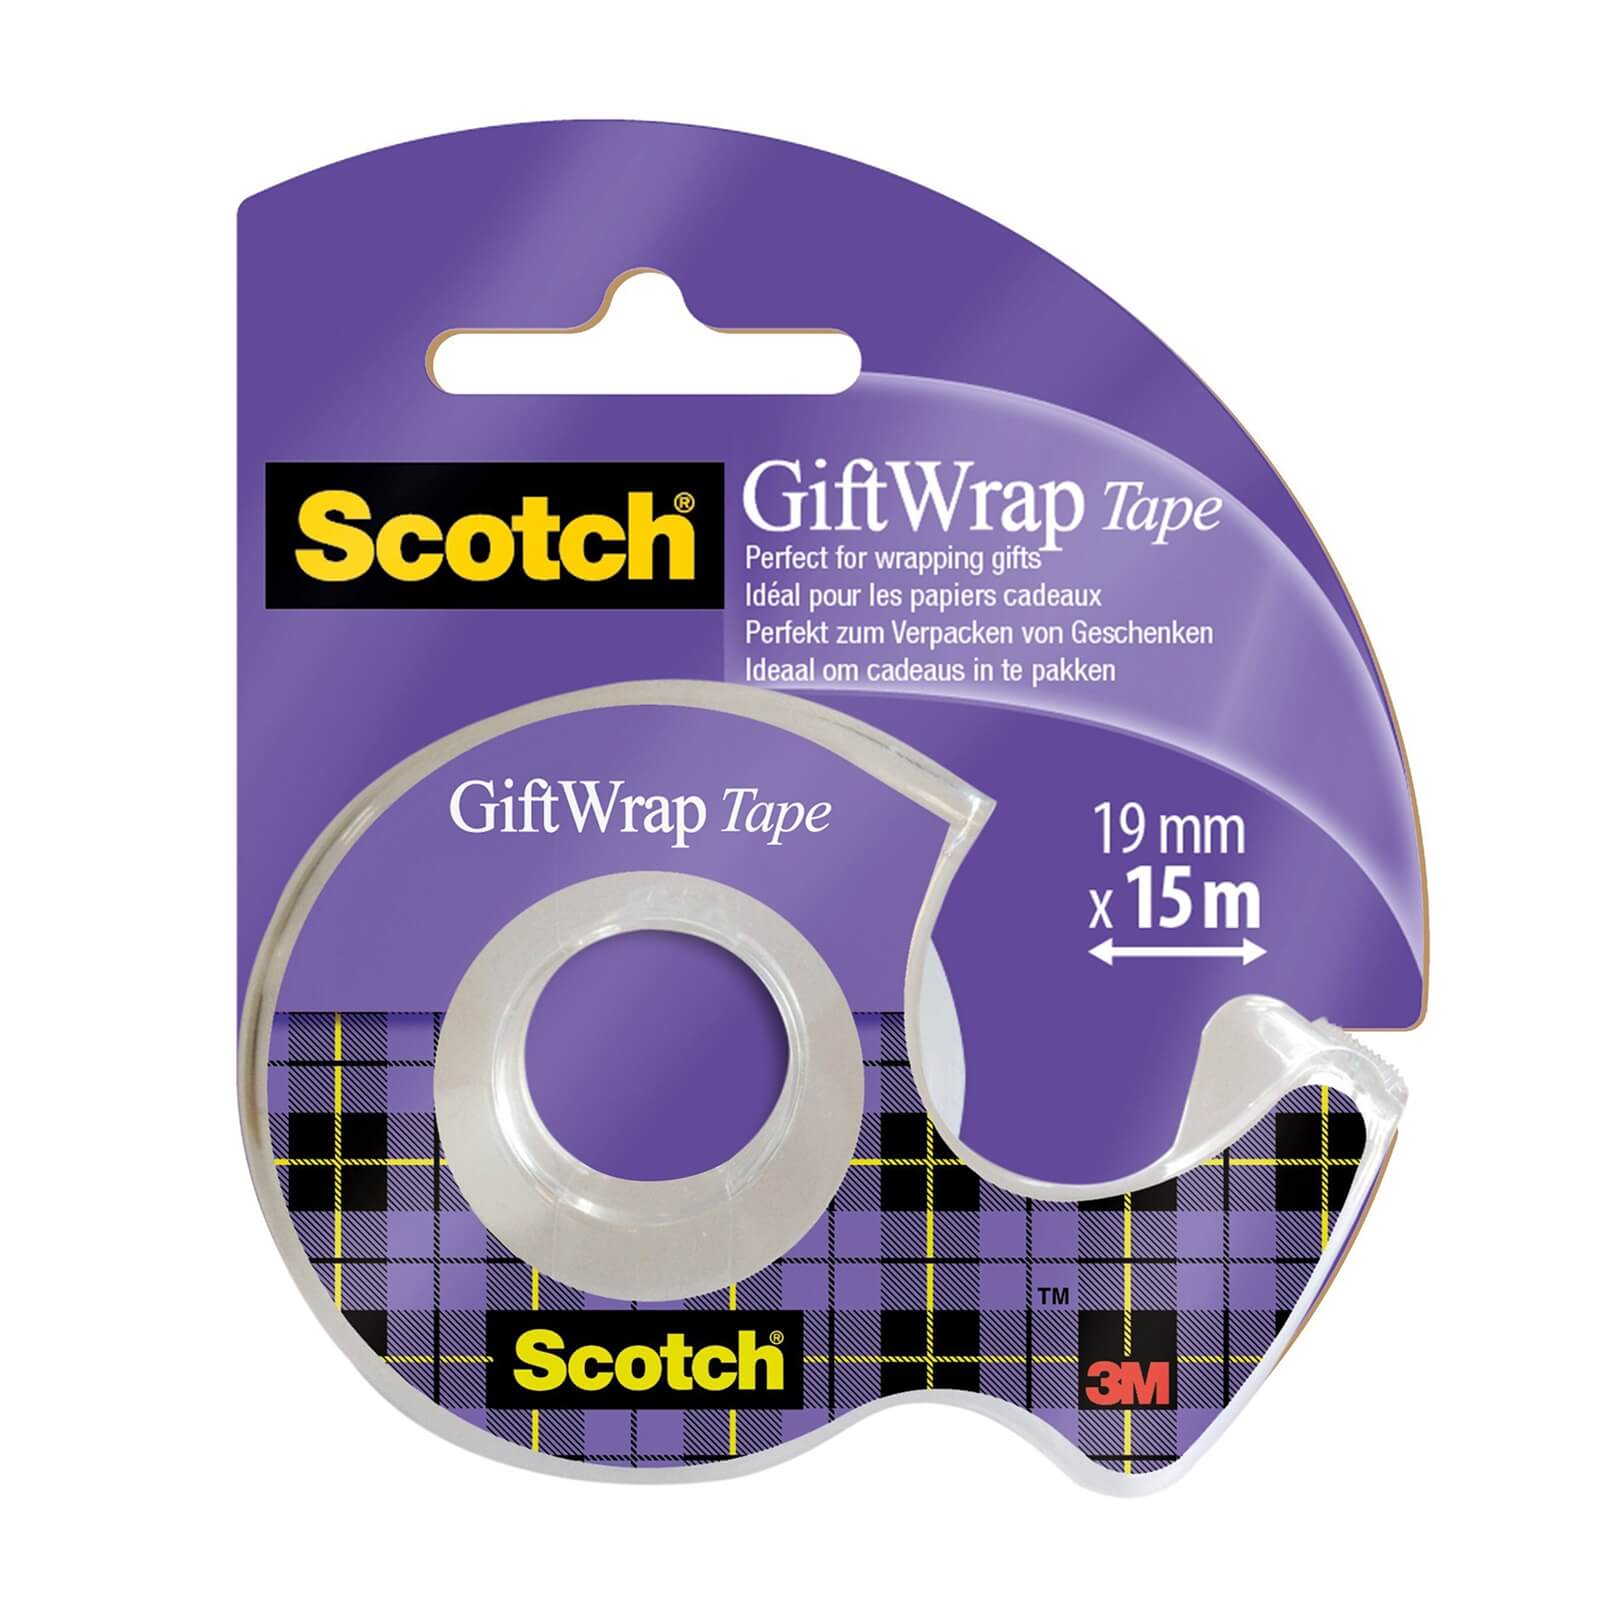 Scotch GiftWrap Tape on Hand Held Dispenser - 19mm x 15m